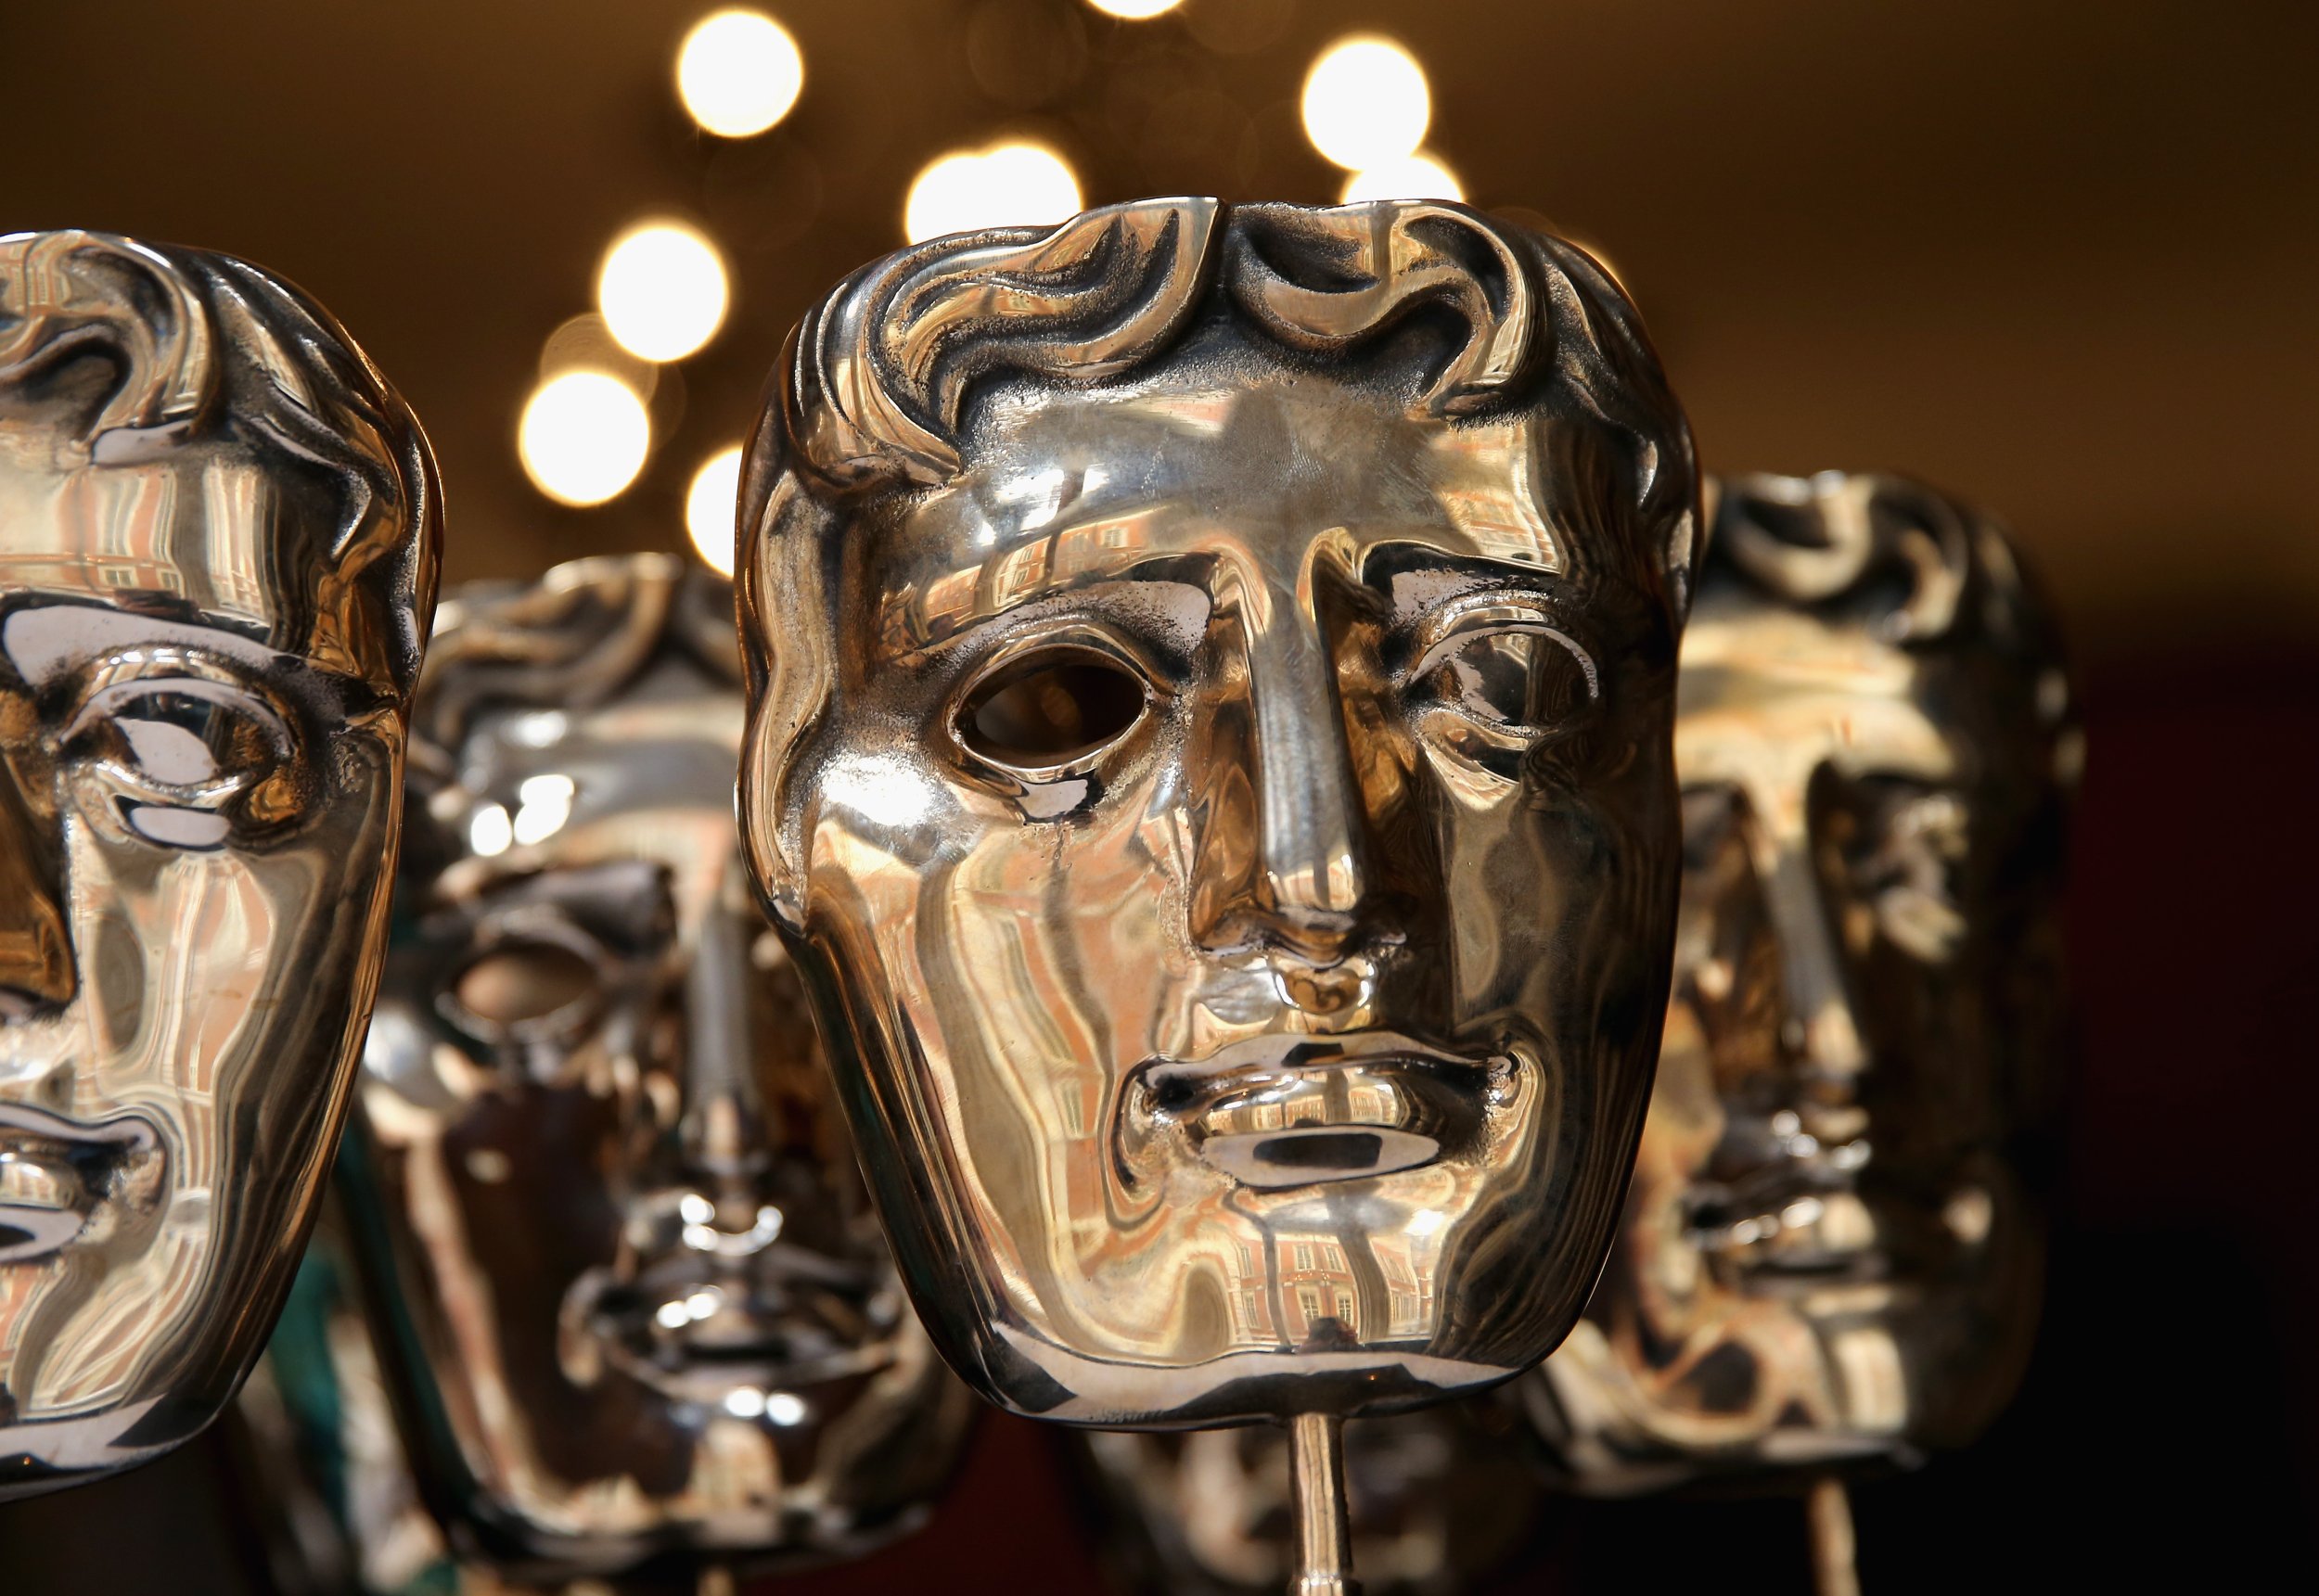 BAFTA Awards 2017 Live Stream Online Video Watch British Honor Film